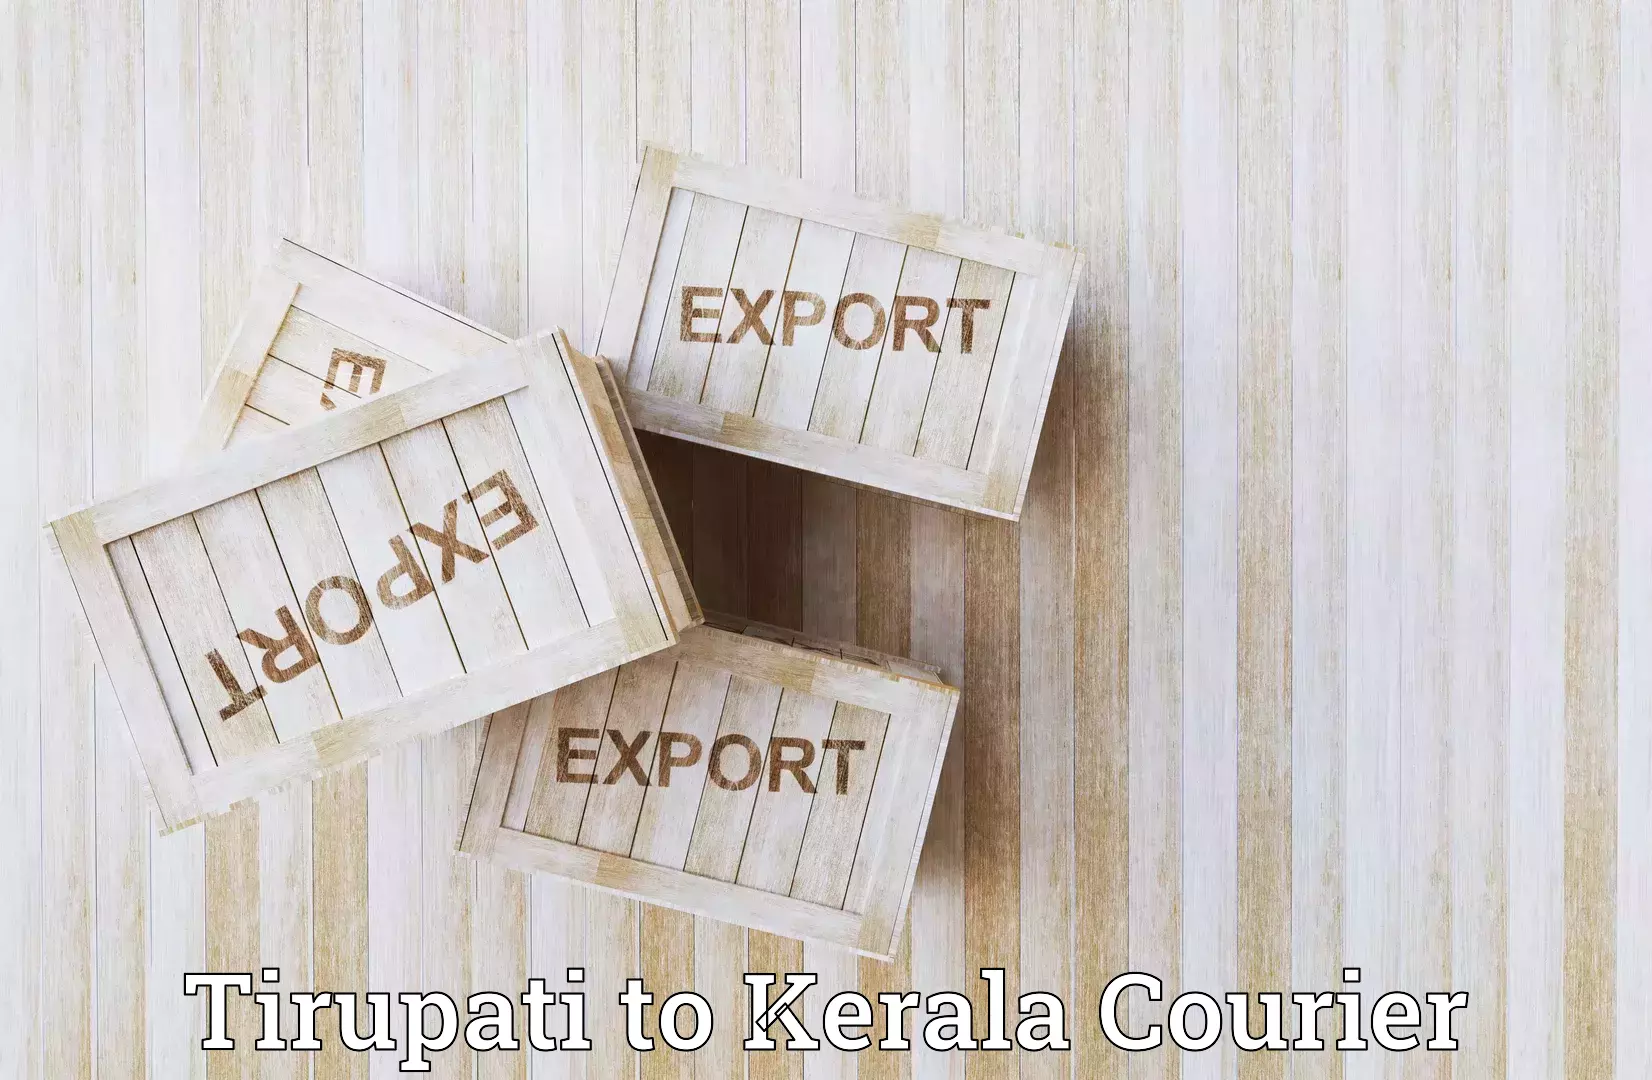 State-of-the-art courier technology Tirupati to Kalpetta